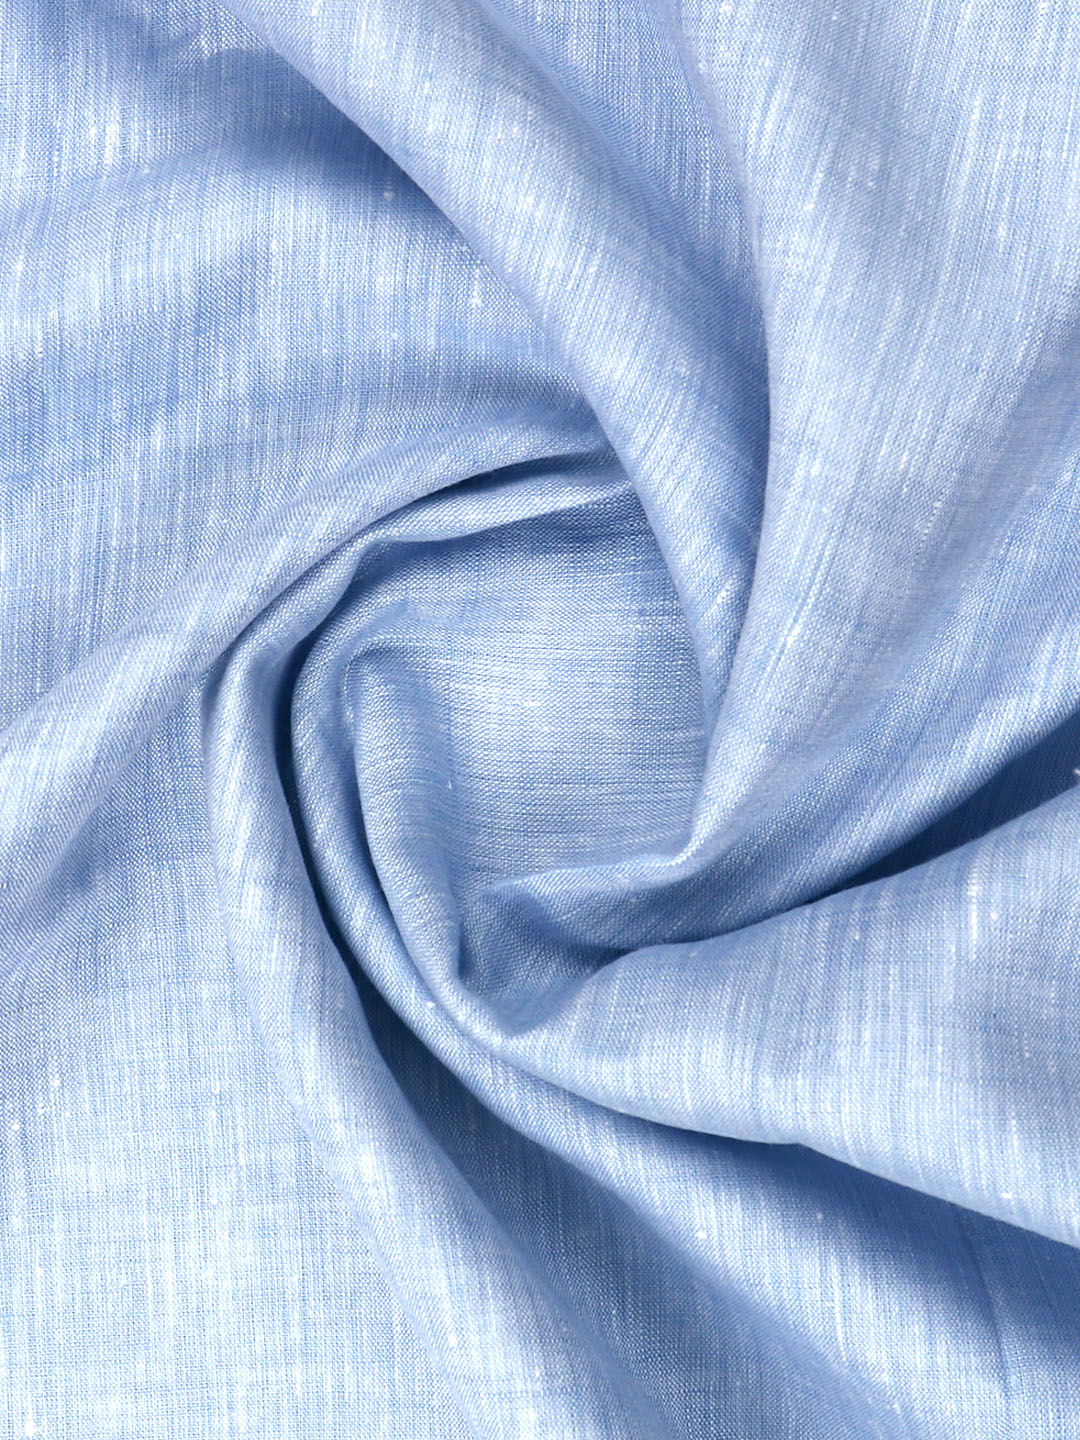 RRFABRICS Cotton Linen Solid Shirt Fabric Price in India - Buy